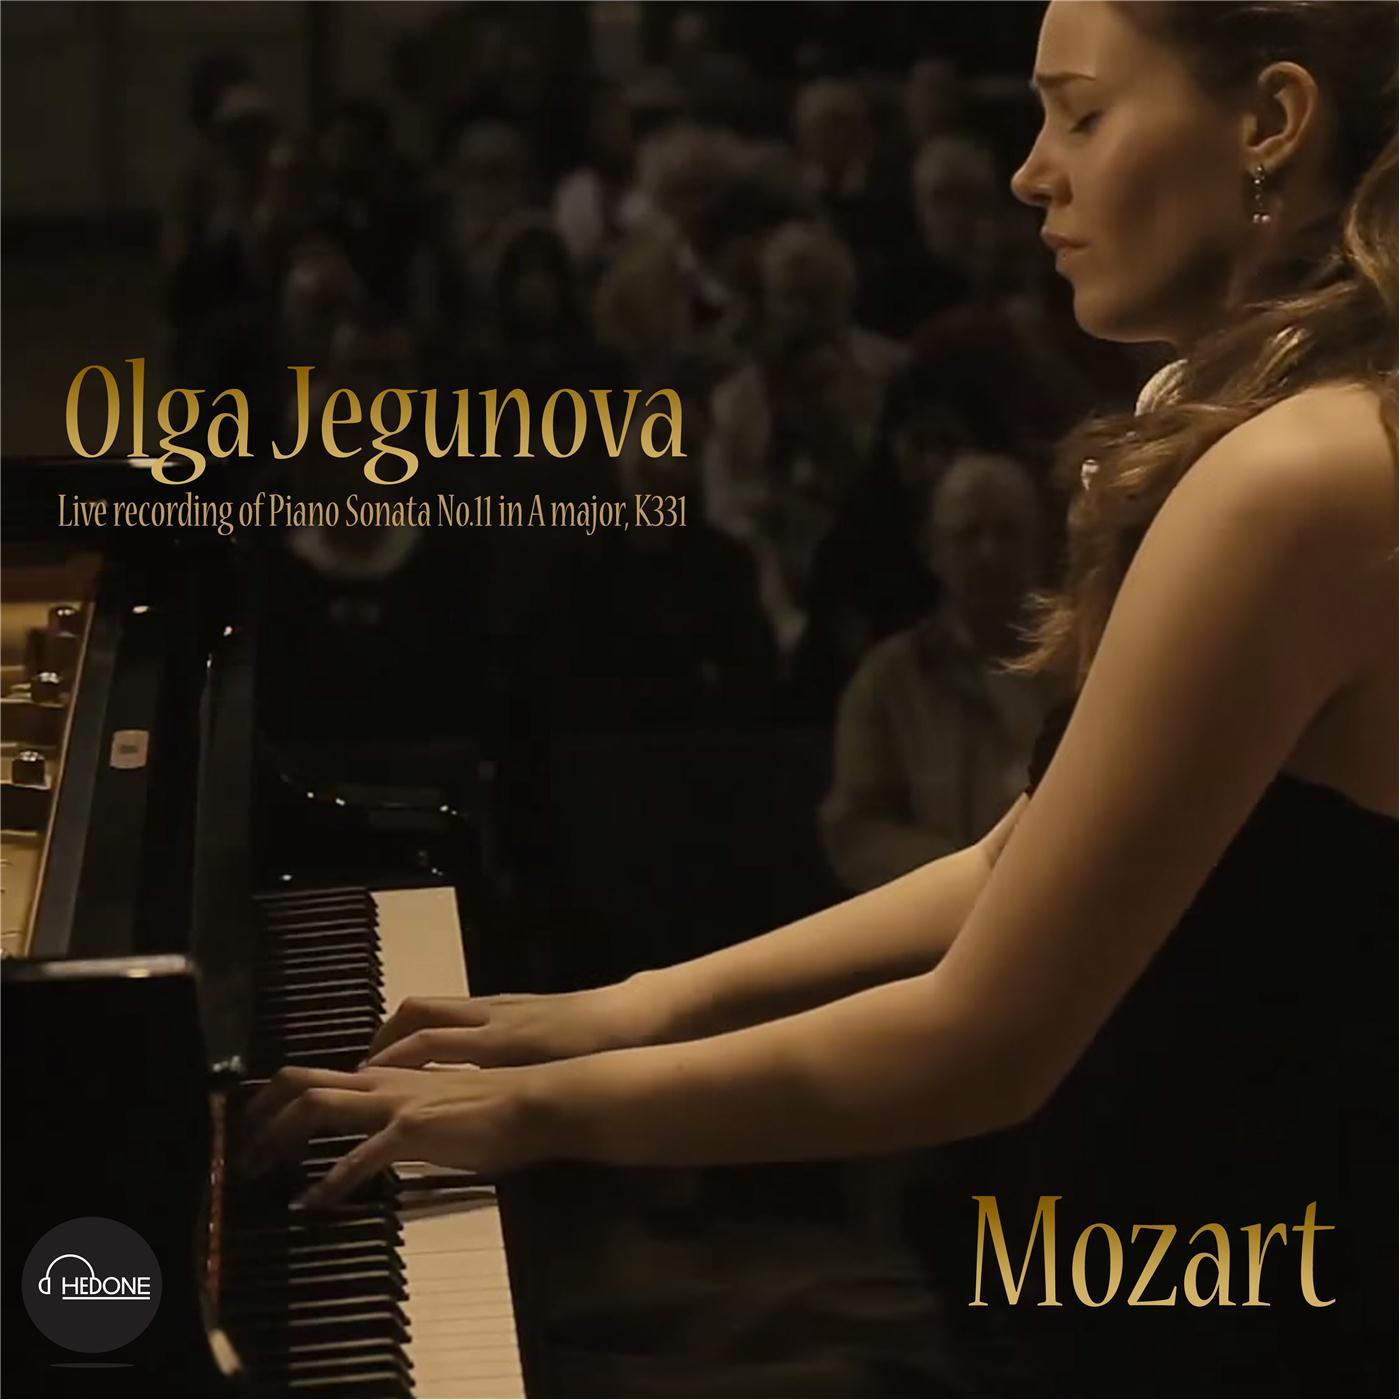 Alla Turca (Live)).由 Olga Jegunova 演 唱.收... 